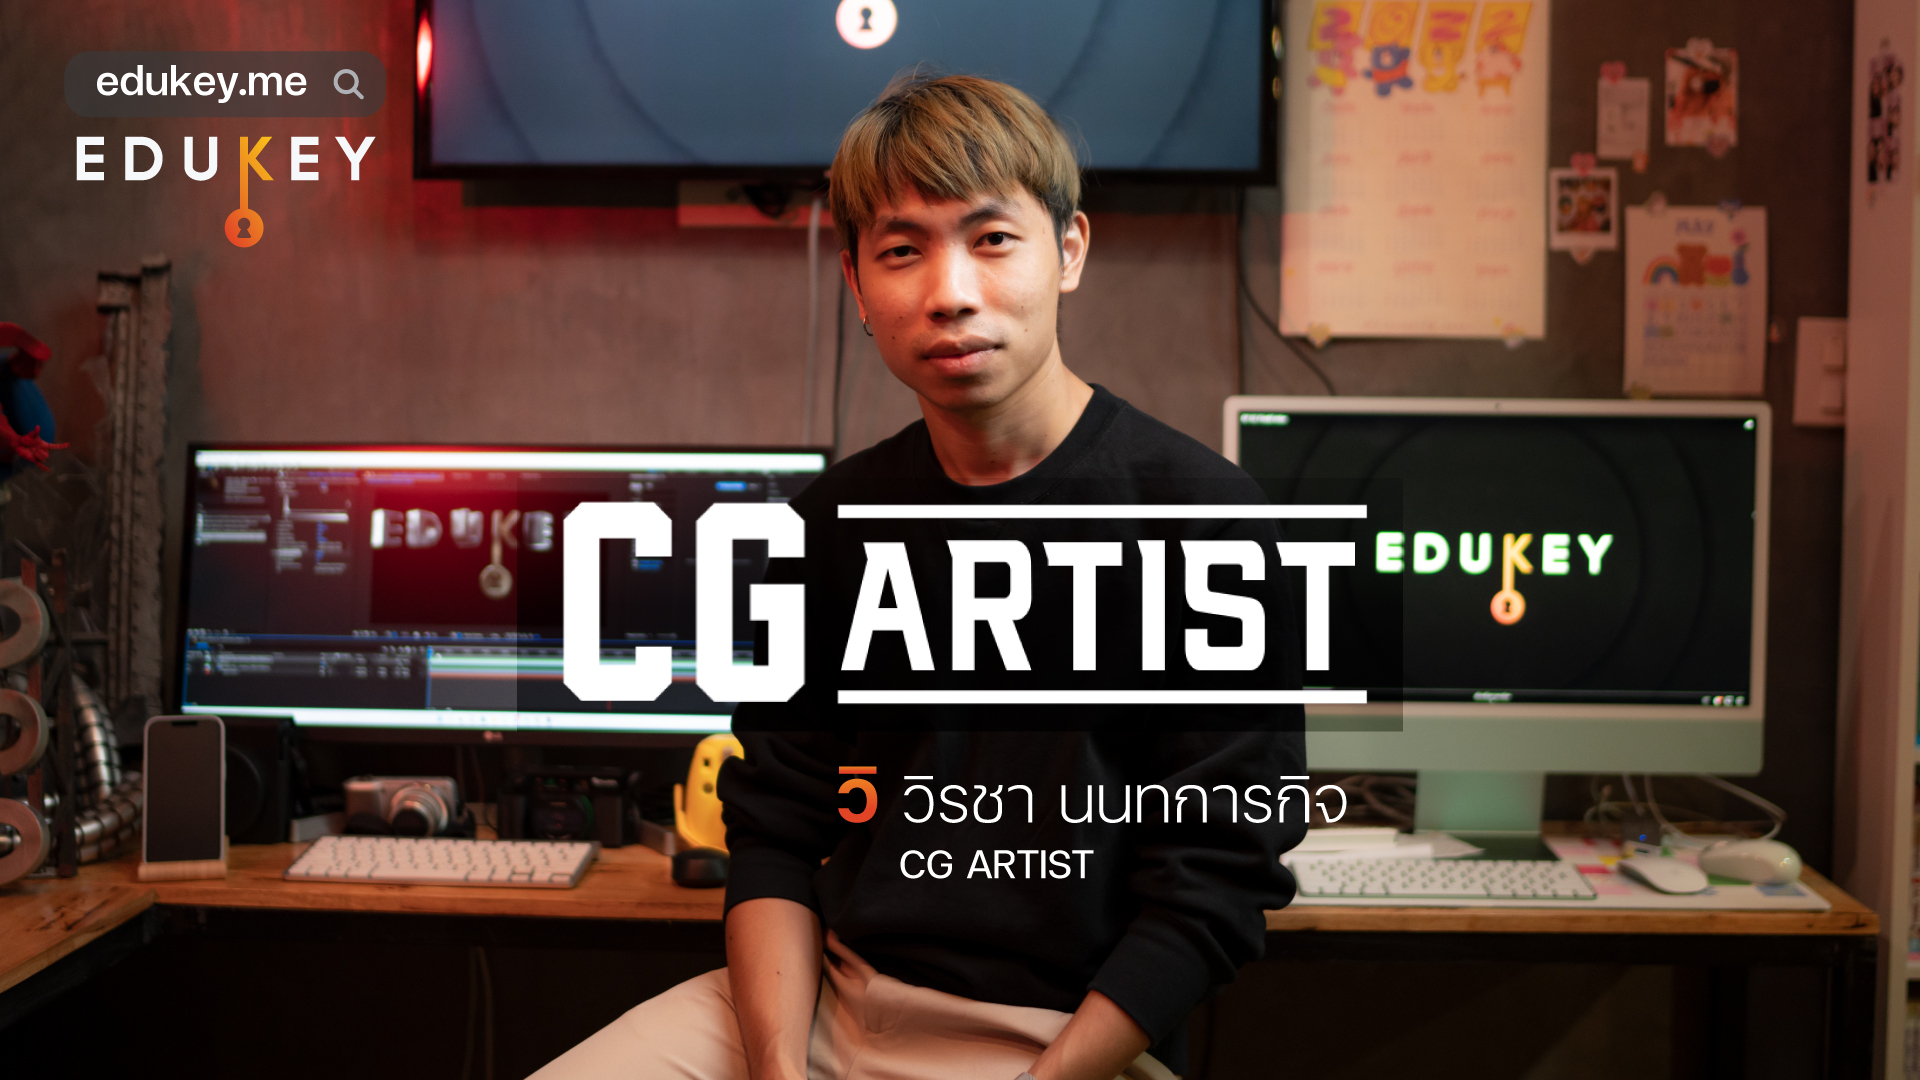 CG Artist อาชีพที่ทำงานด้วยคอมพิวเตอร์และศิลปะ